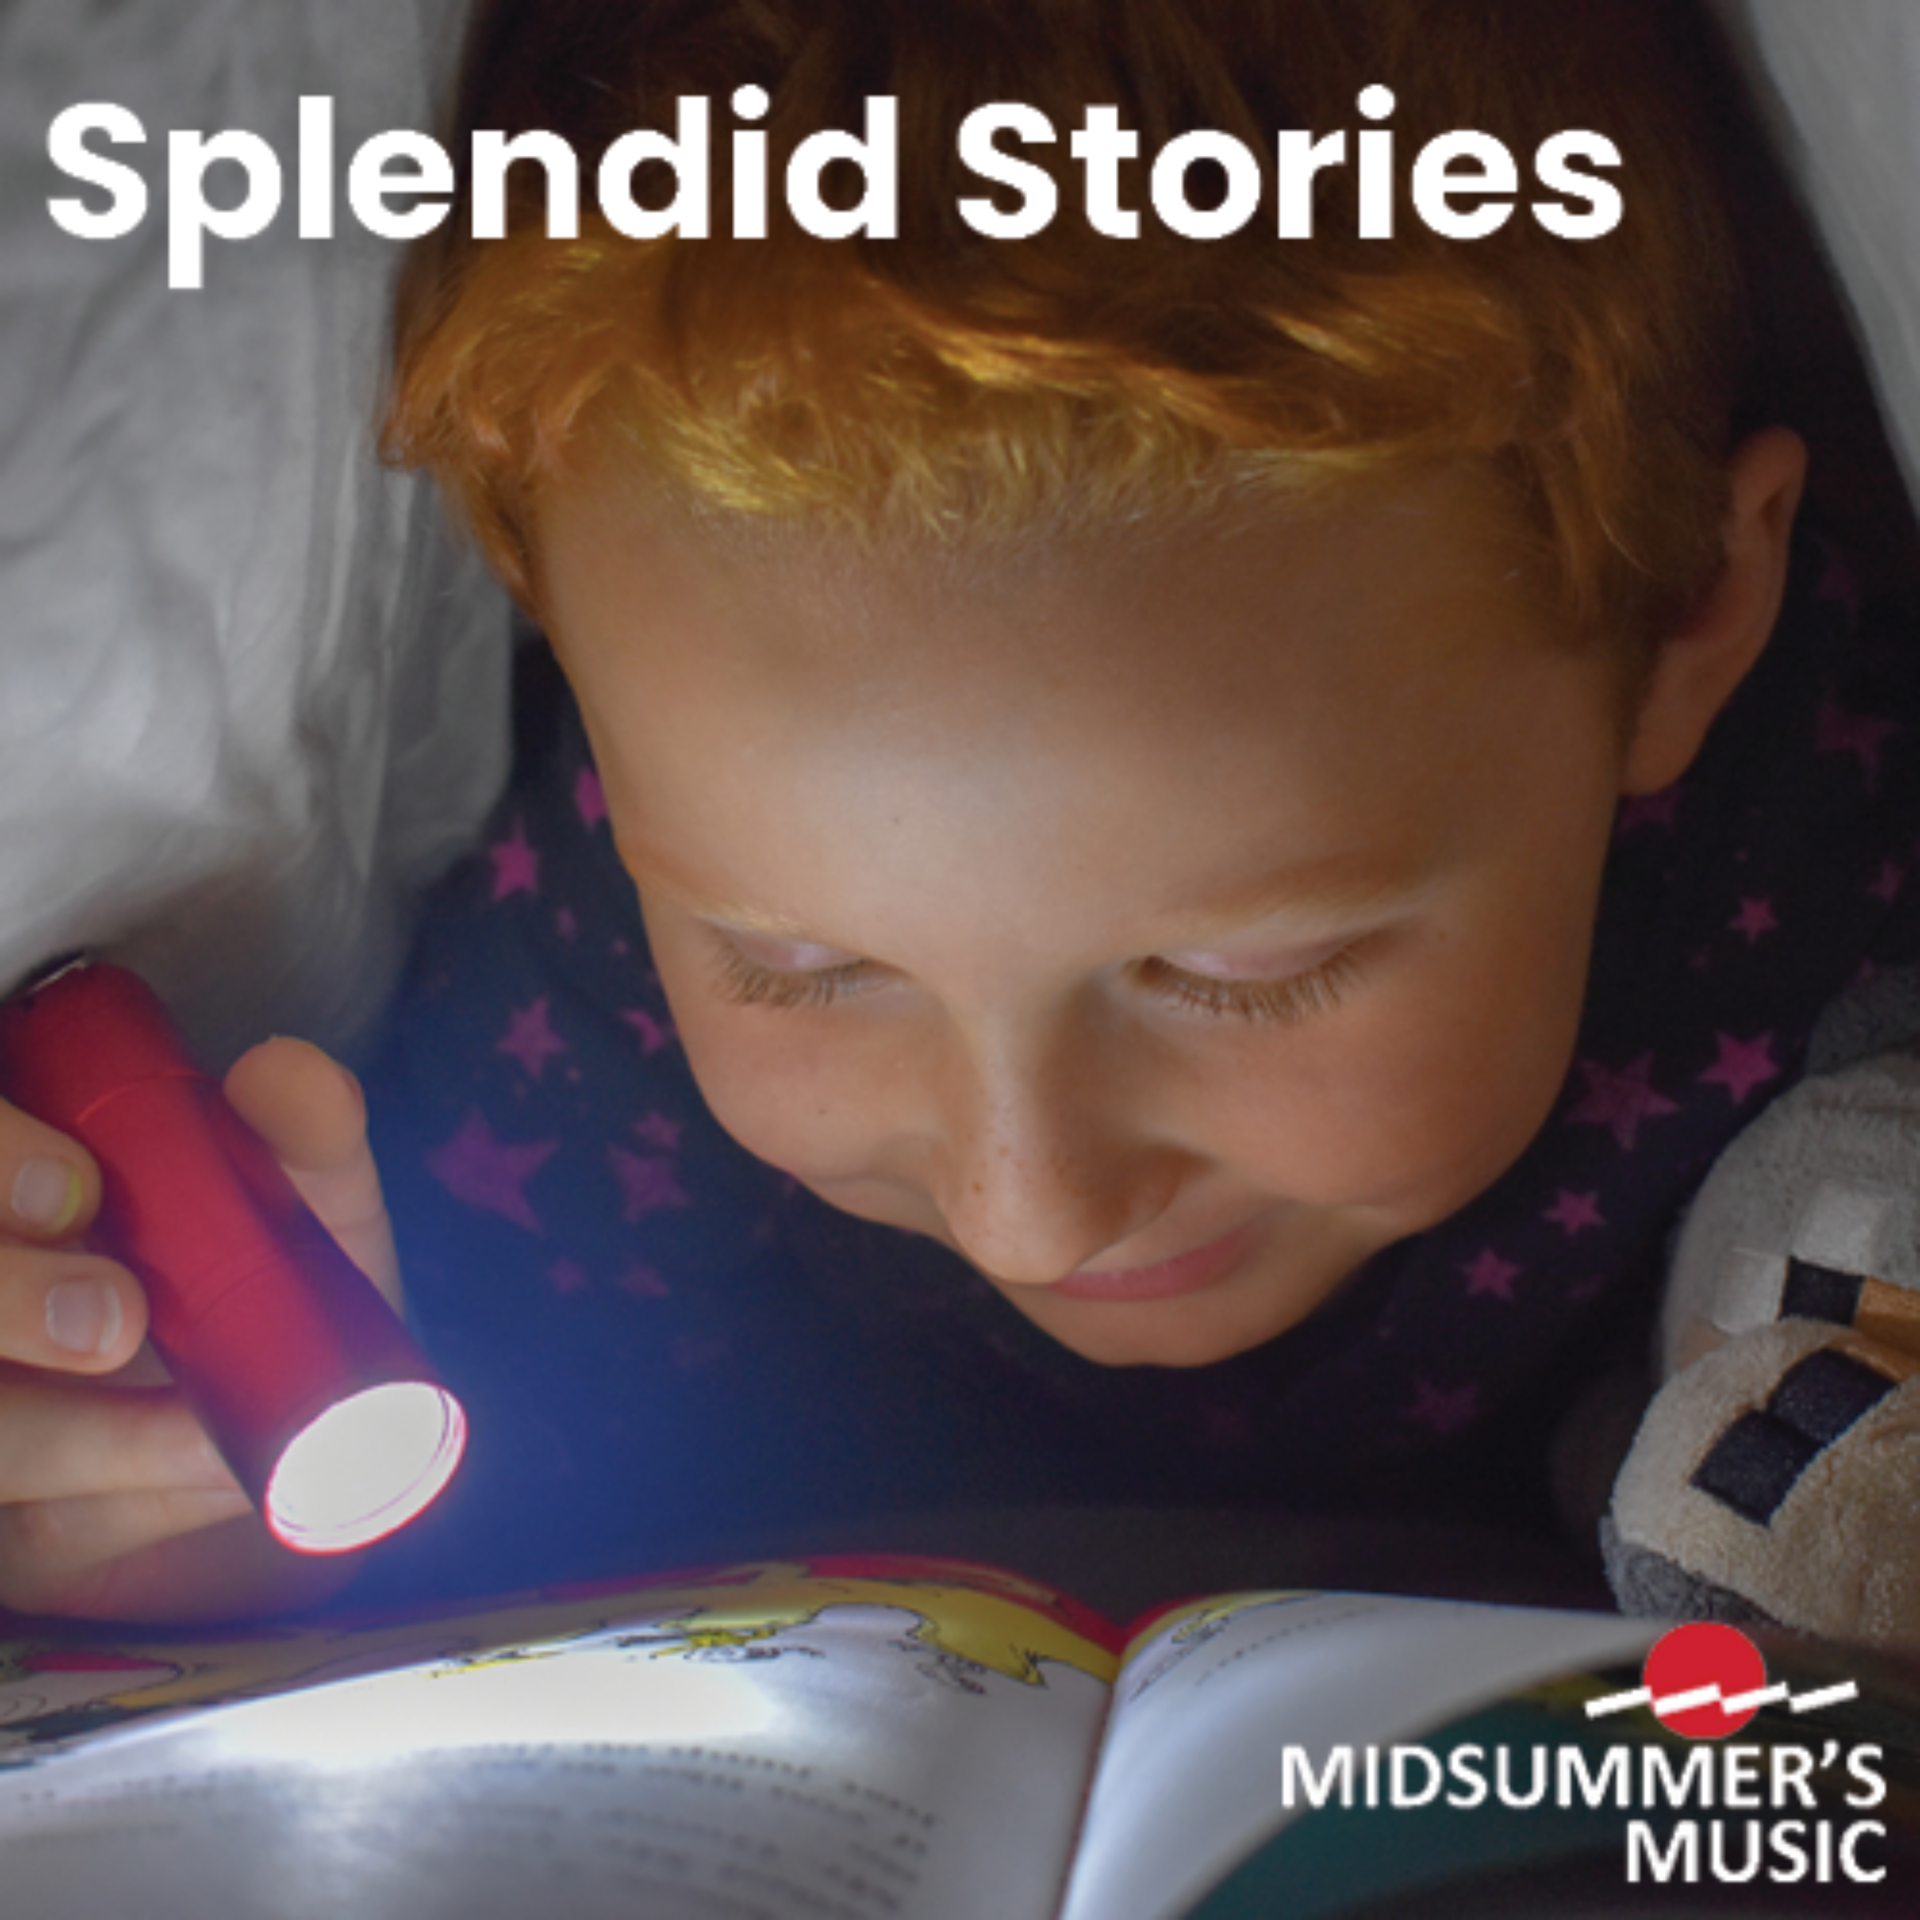 Splendid Stories: Midsummer's Music, August 27th